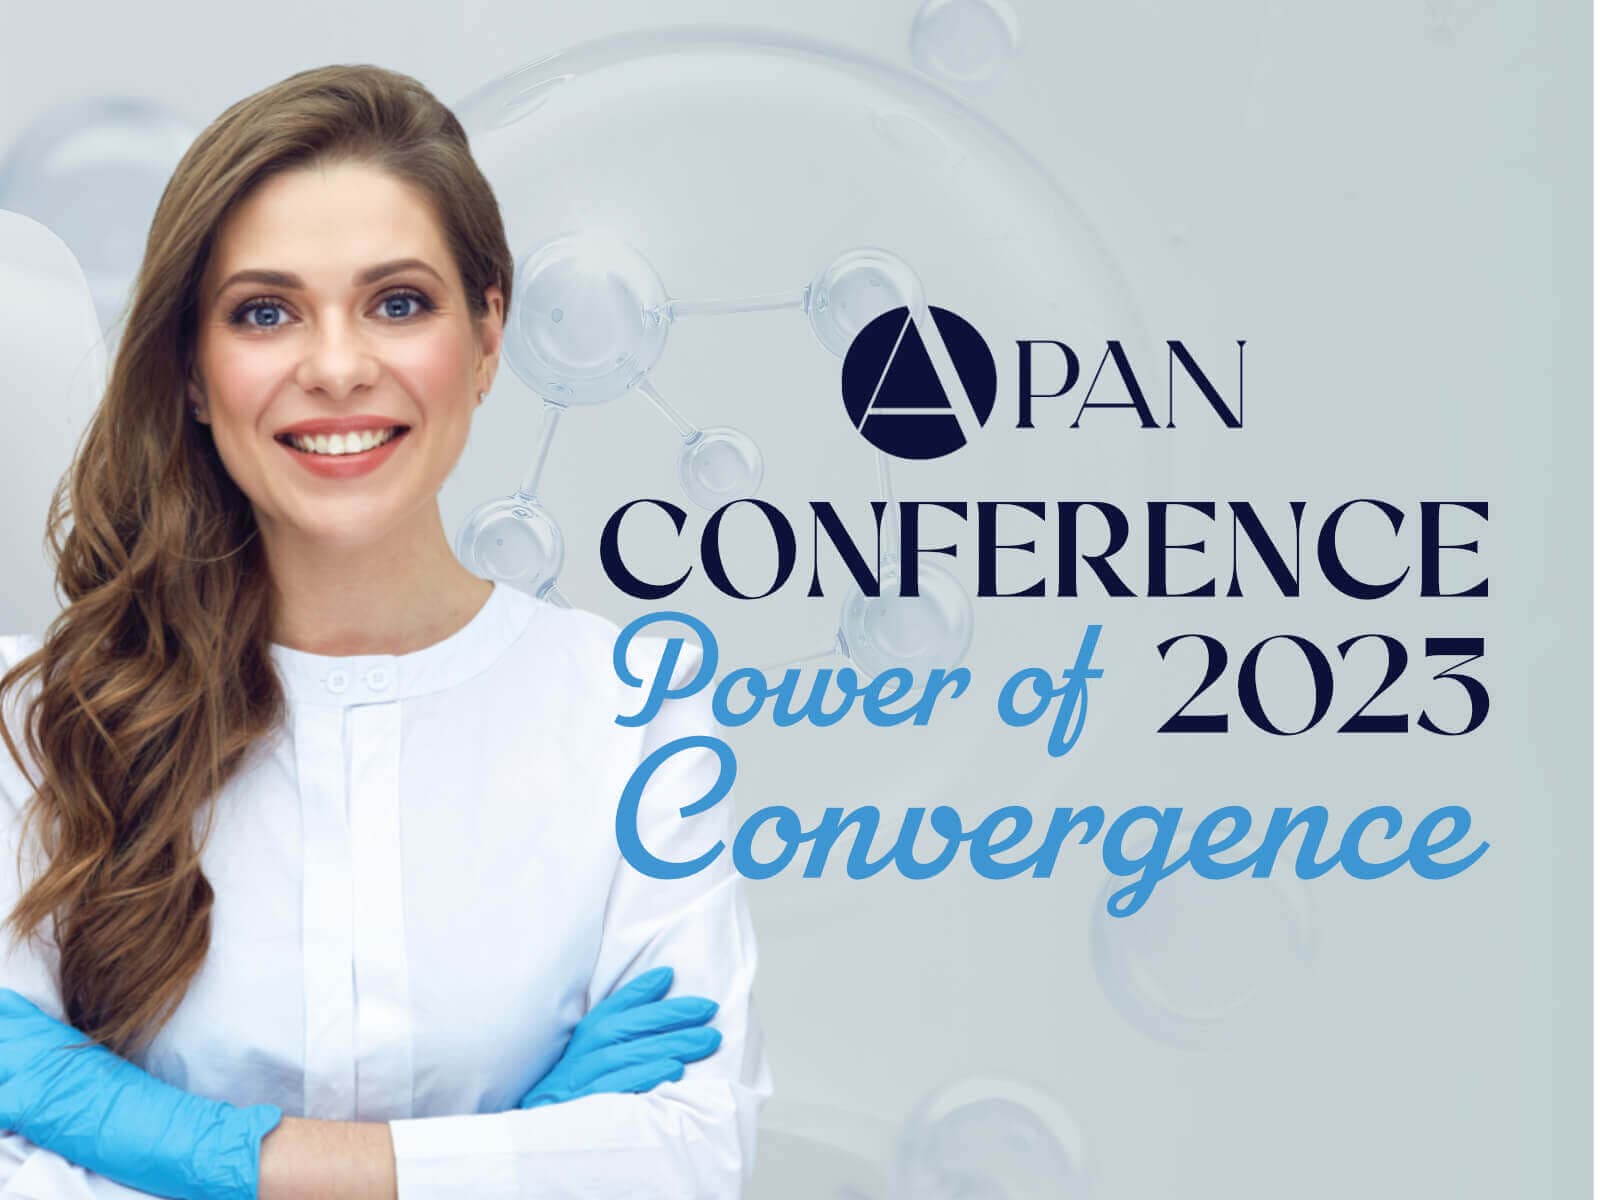 APAN Conference 2023 image